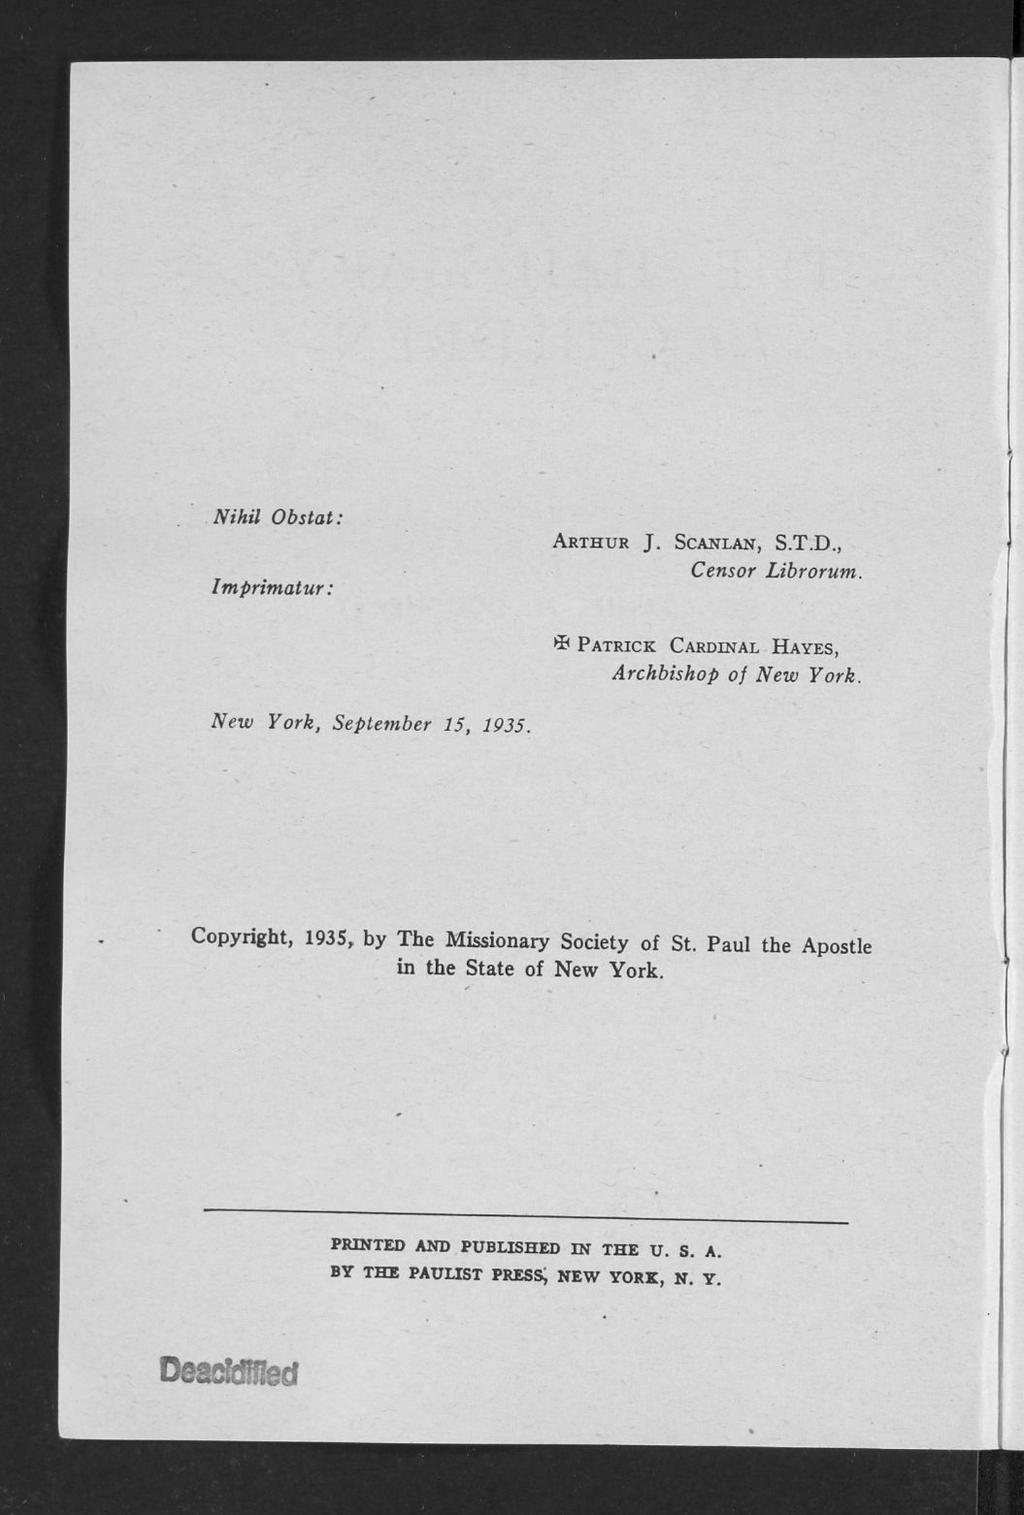 Nihil Obstat: Imprimatur: ARTHUR J. SCANLAN, S.T.D., Censor Librorum. * PATRICK CARDINAL HAYES, Archbishop of New York. New York, September 15, 1935.